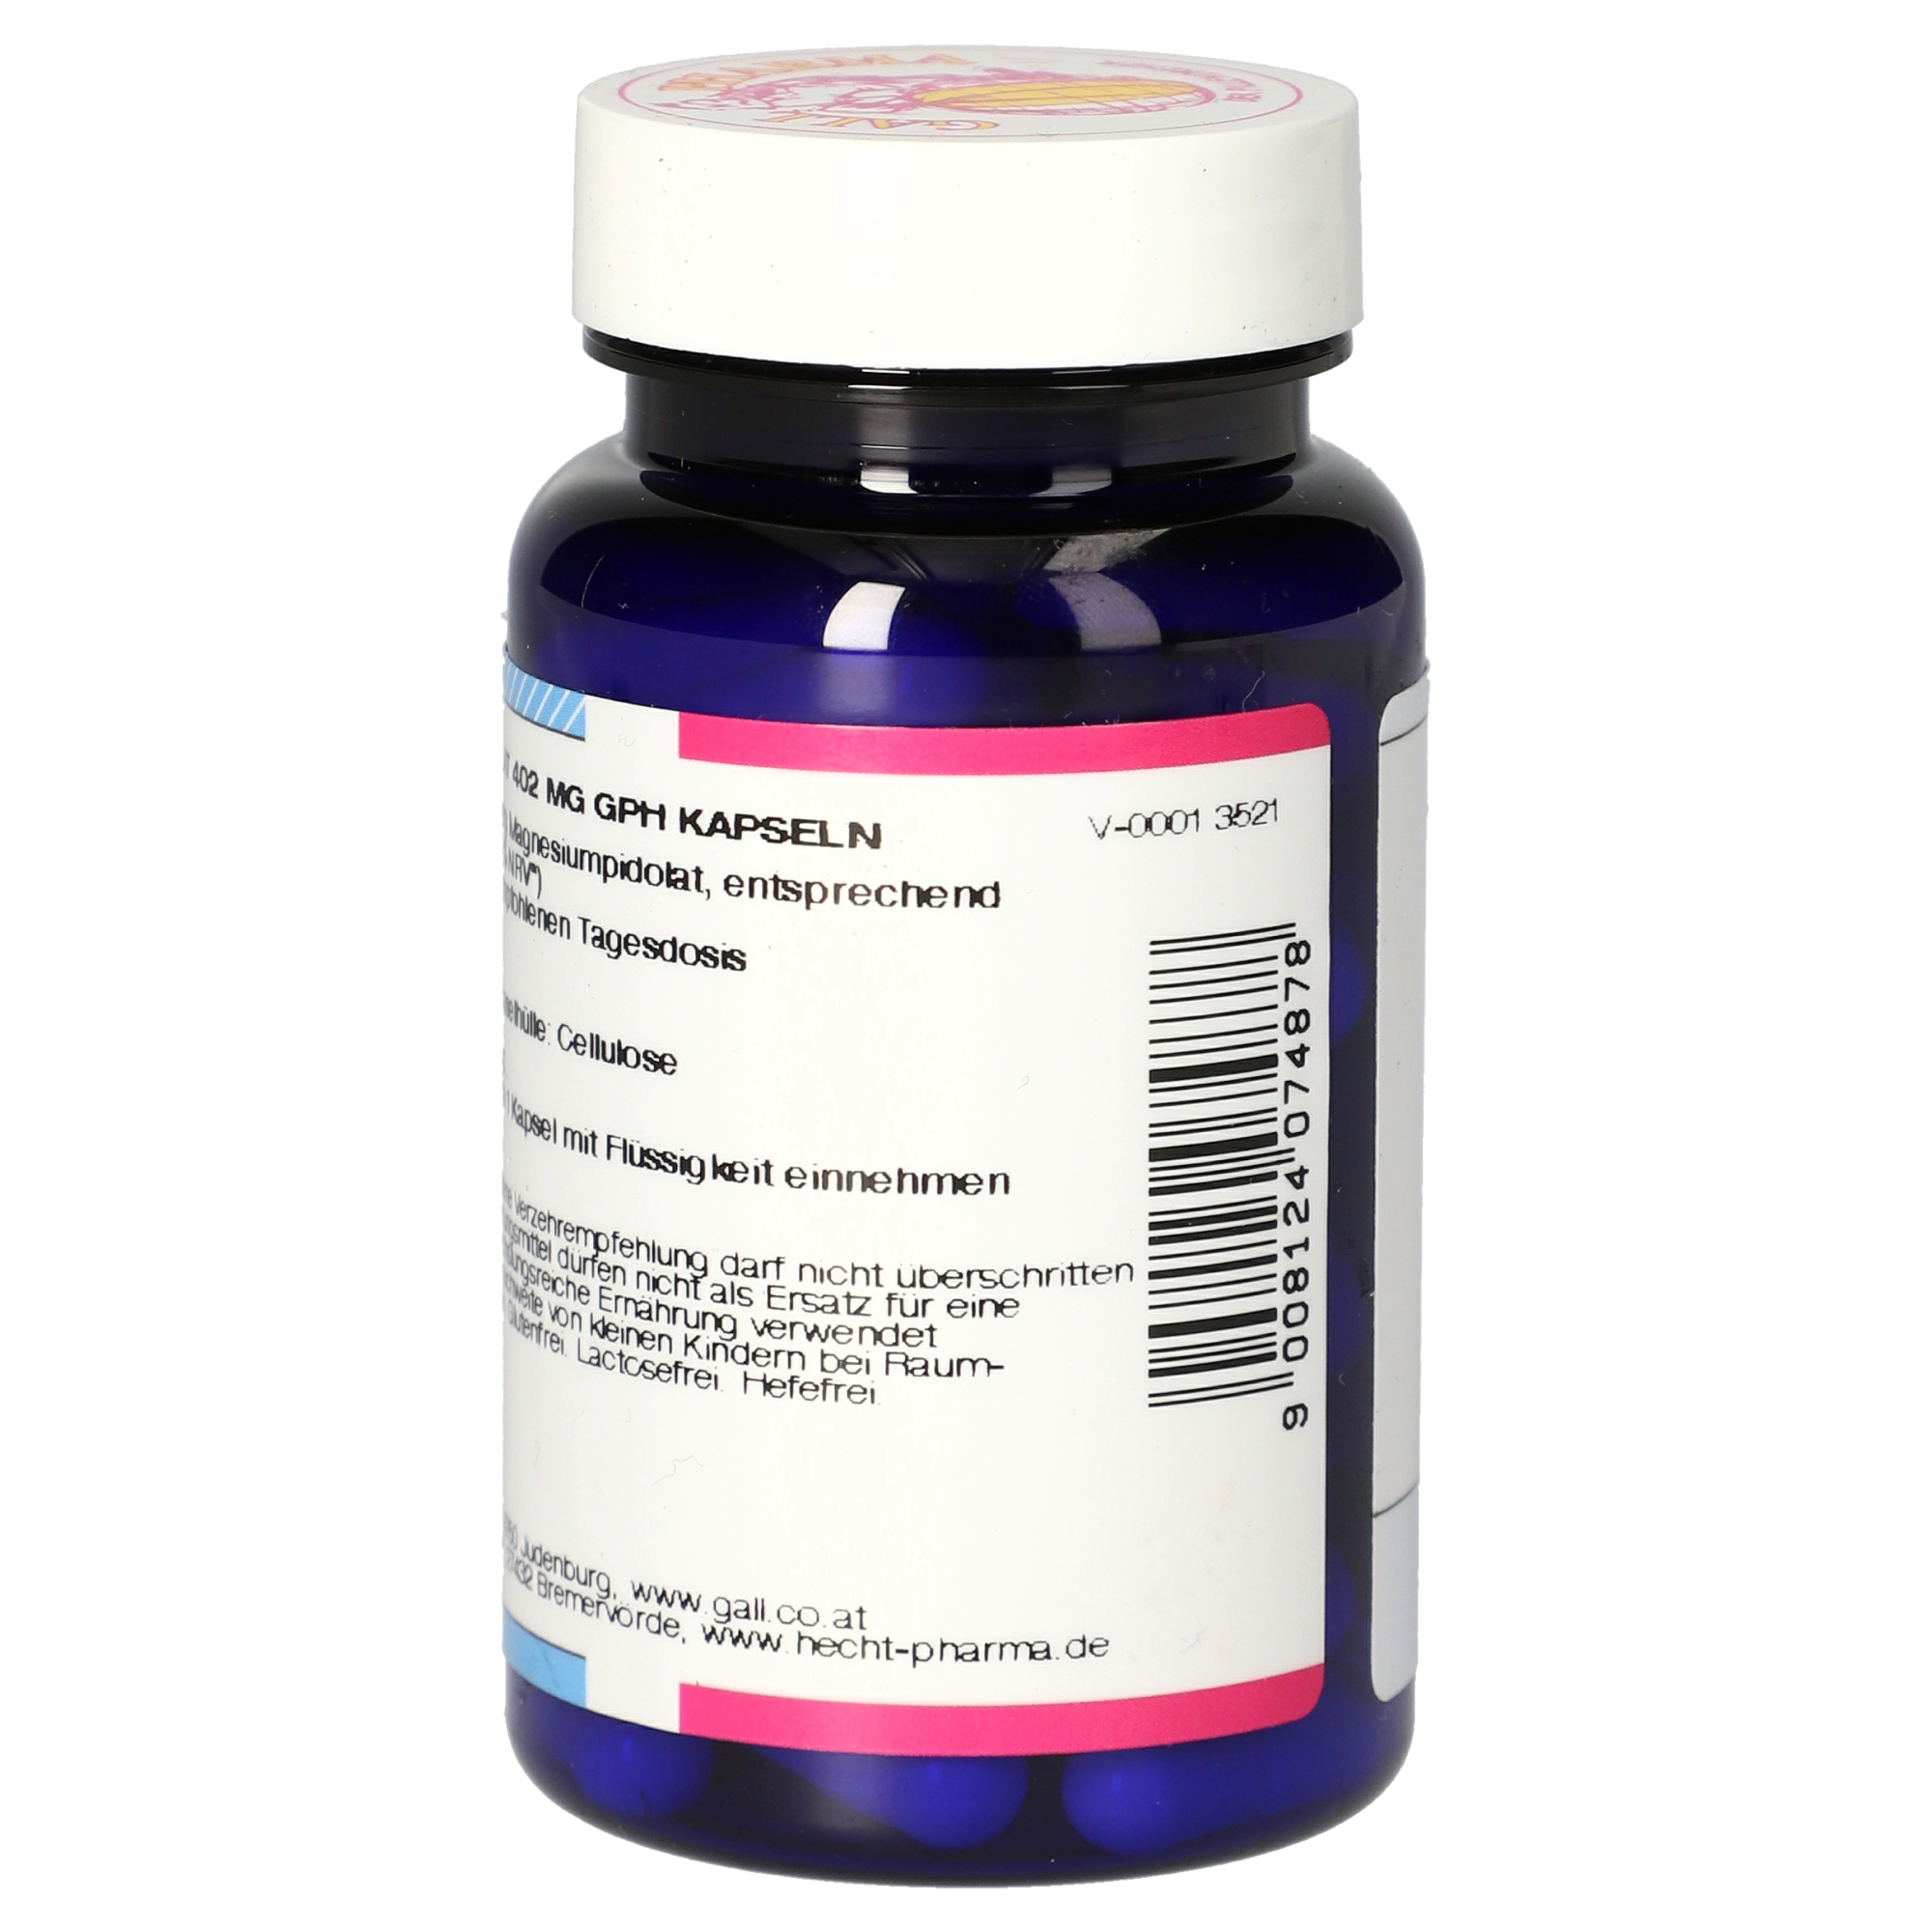 Magnesiumpidolat 402 mg GPH Kapseln